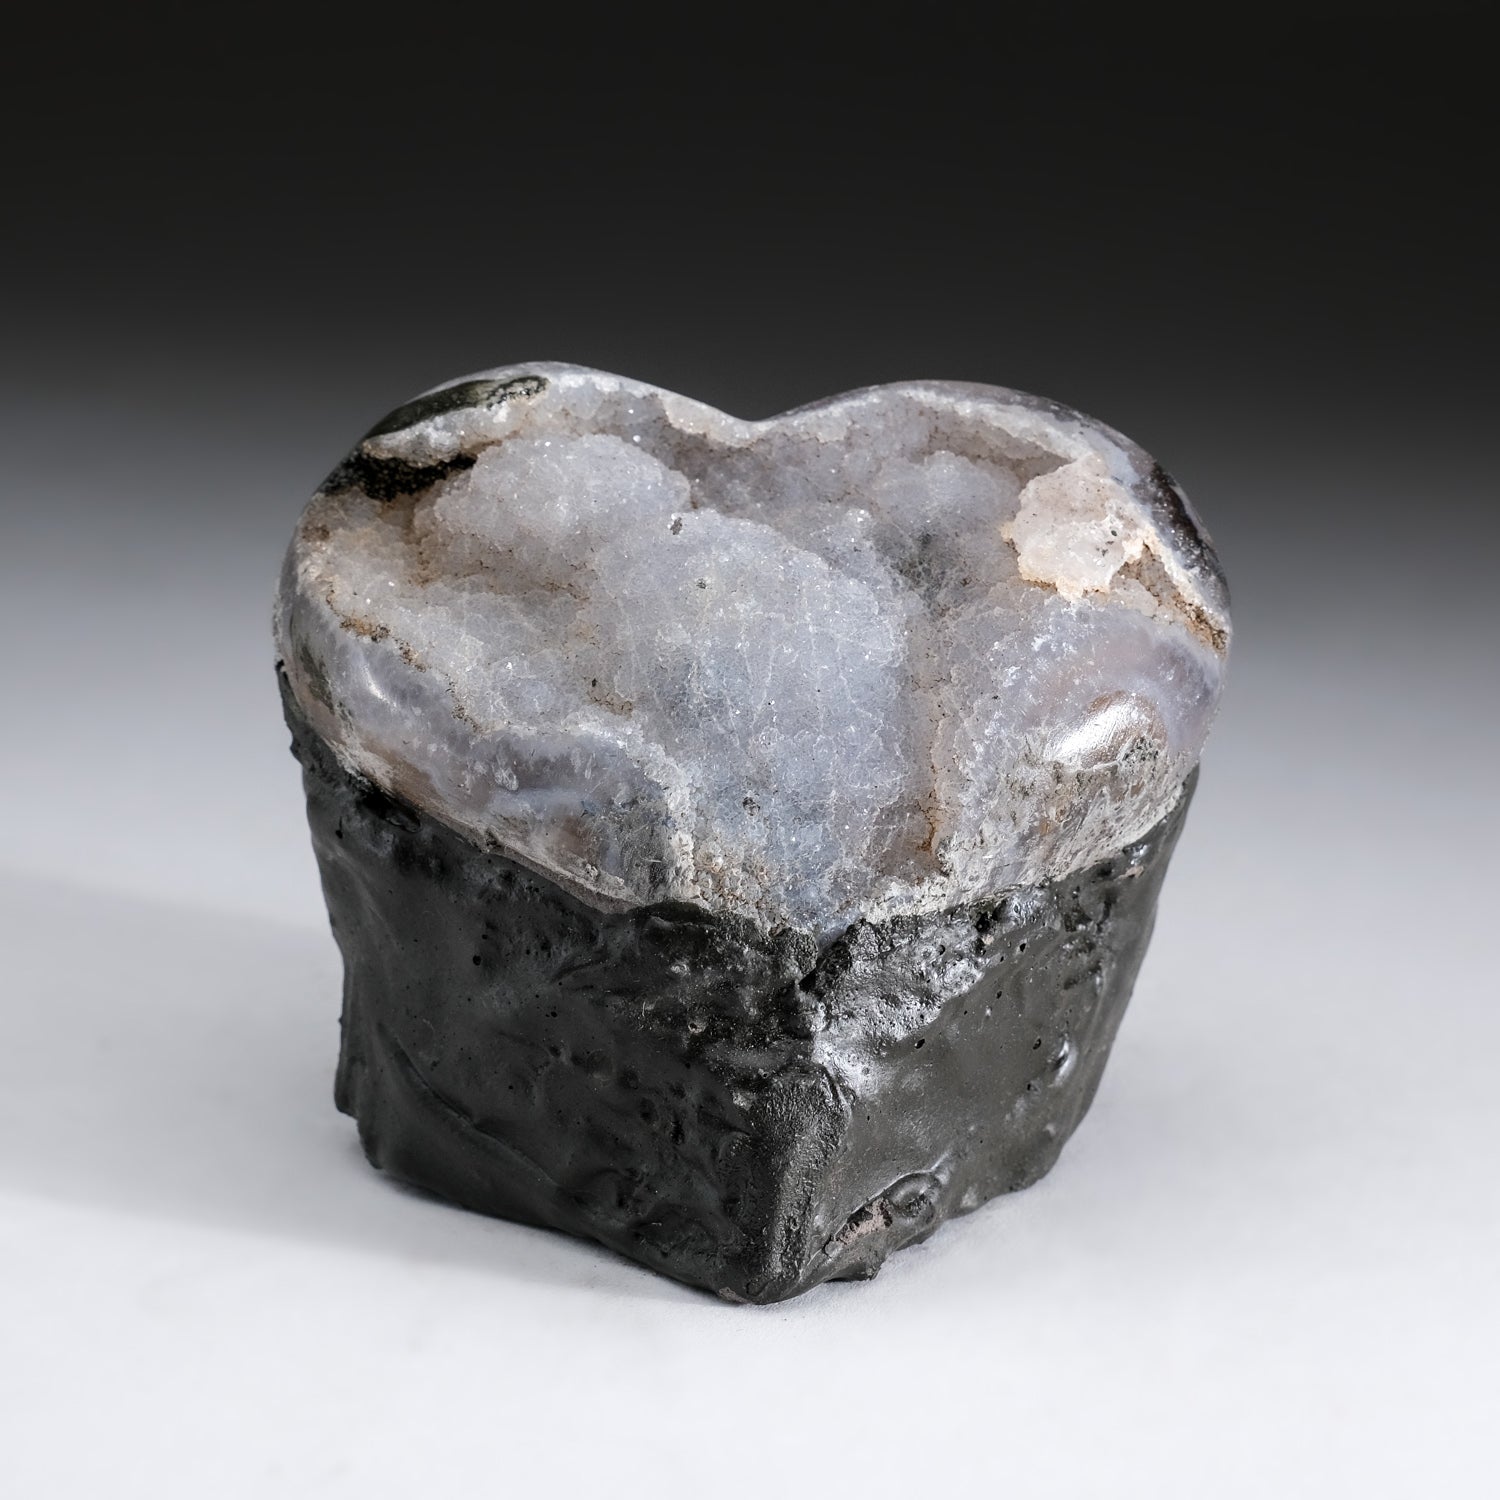 Druzy Crystal Amethyst Agate Geode Heart from Brazil (1.4 lbs)